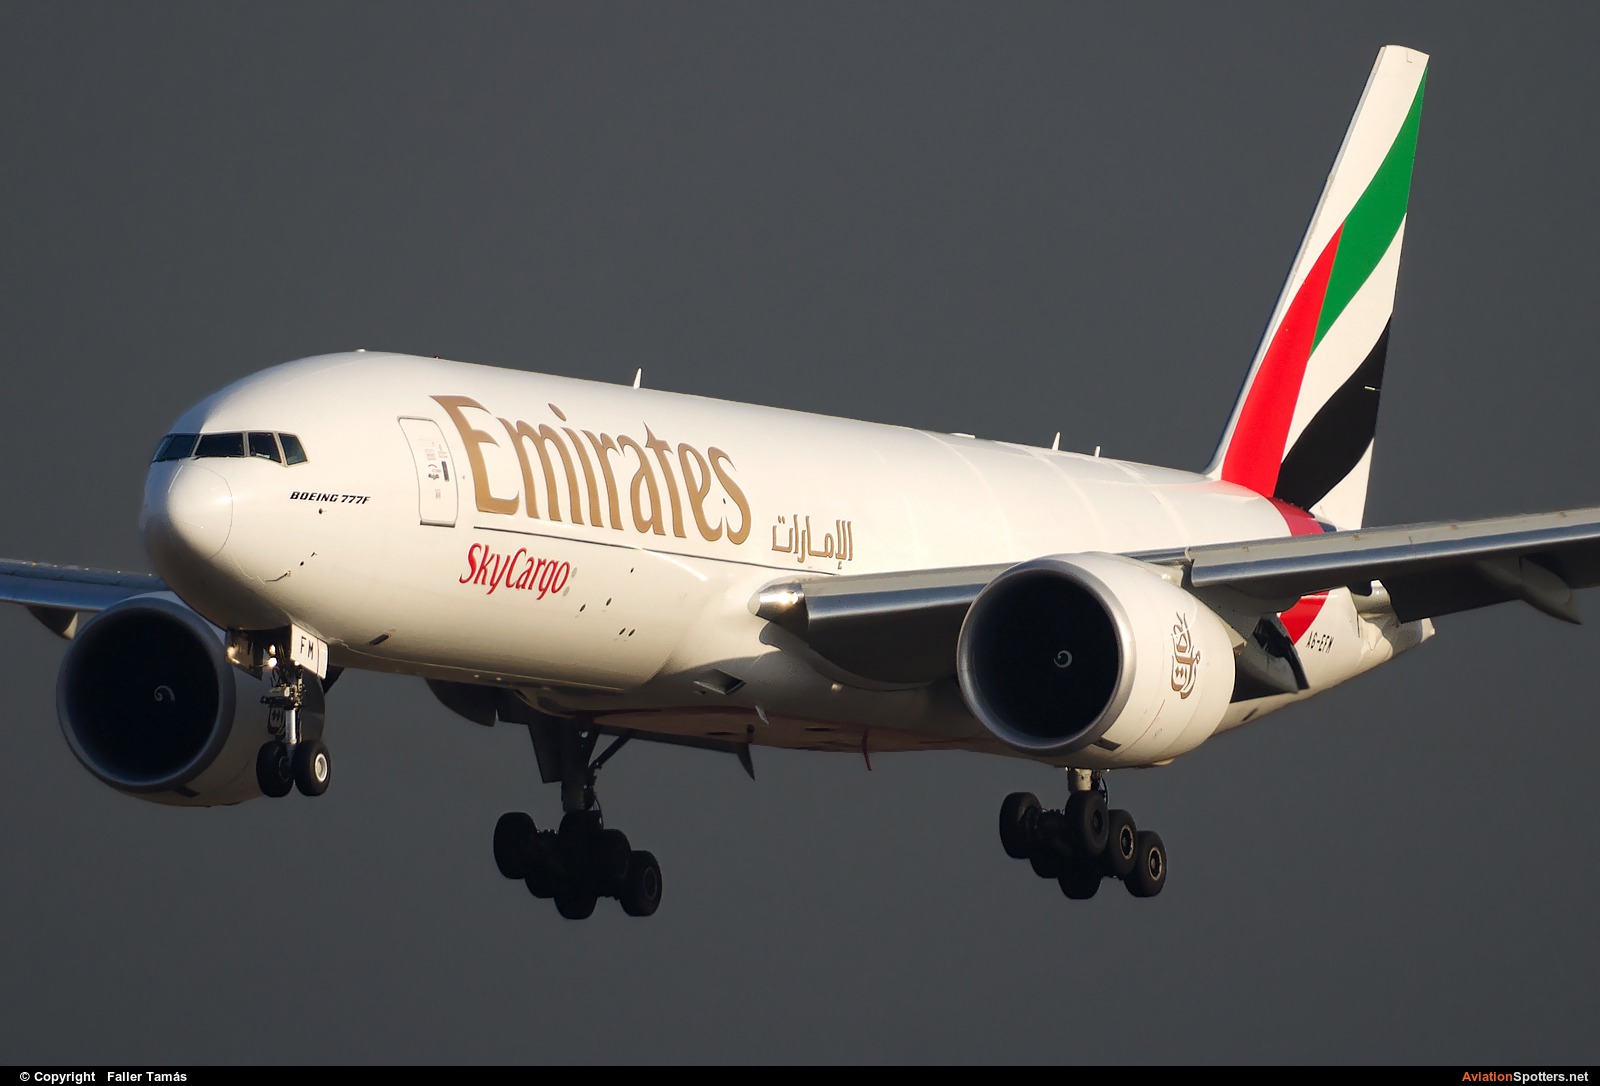 Emirates Sky Cargo  -  777-F1B  (A6-EFM) By Faller Tamás (fallto78)